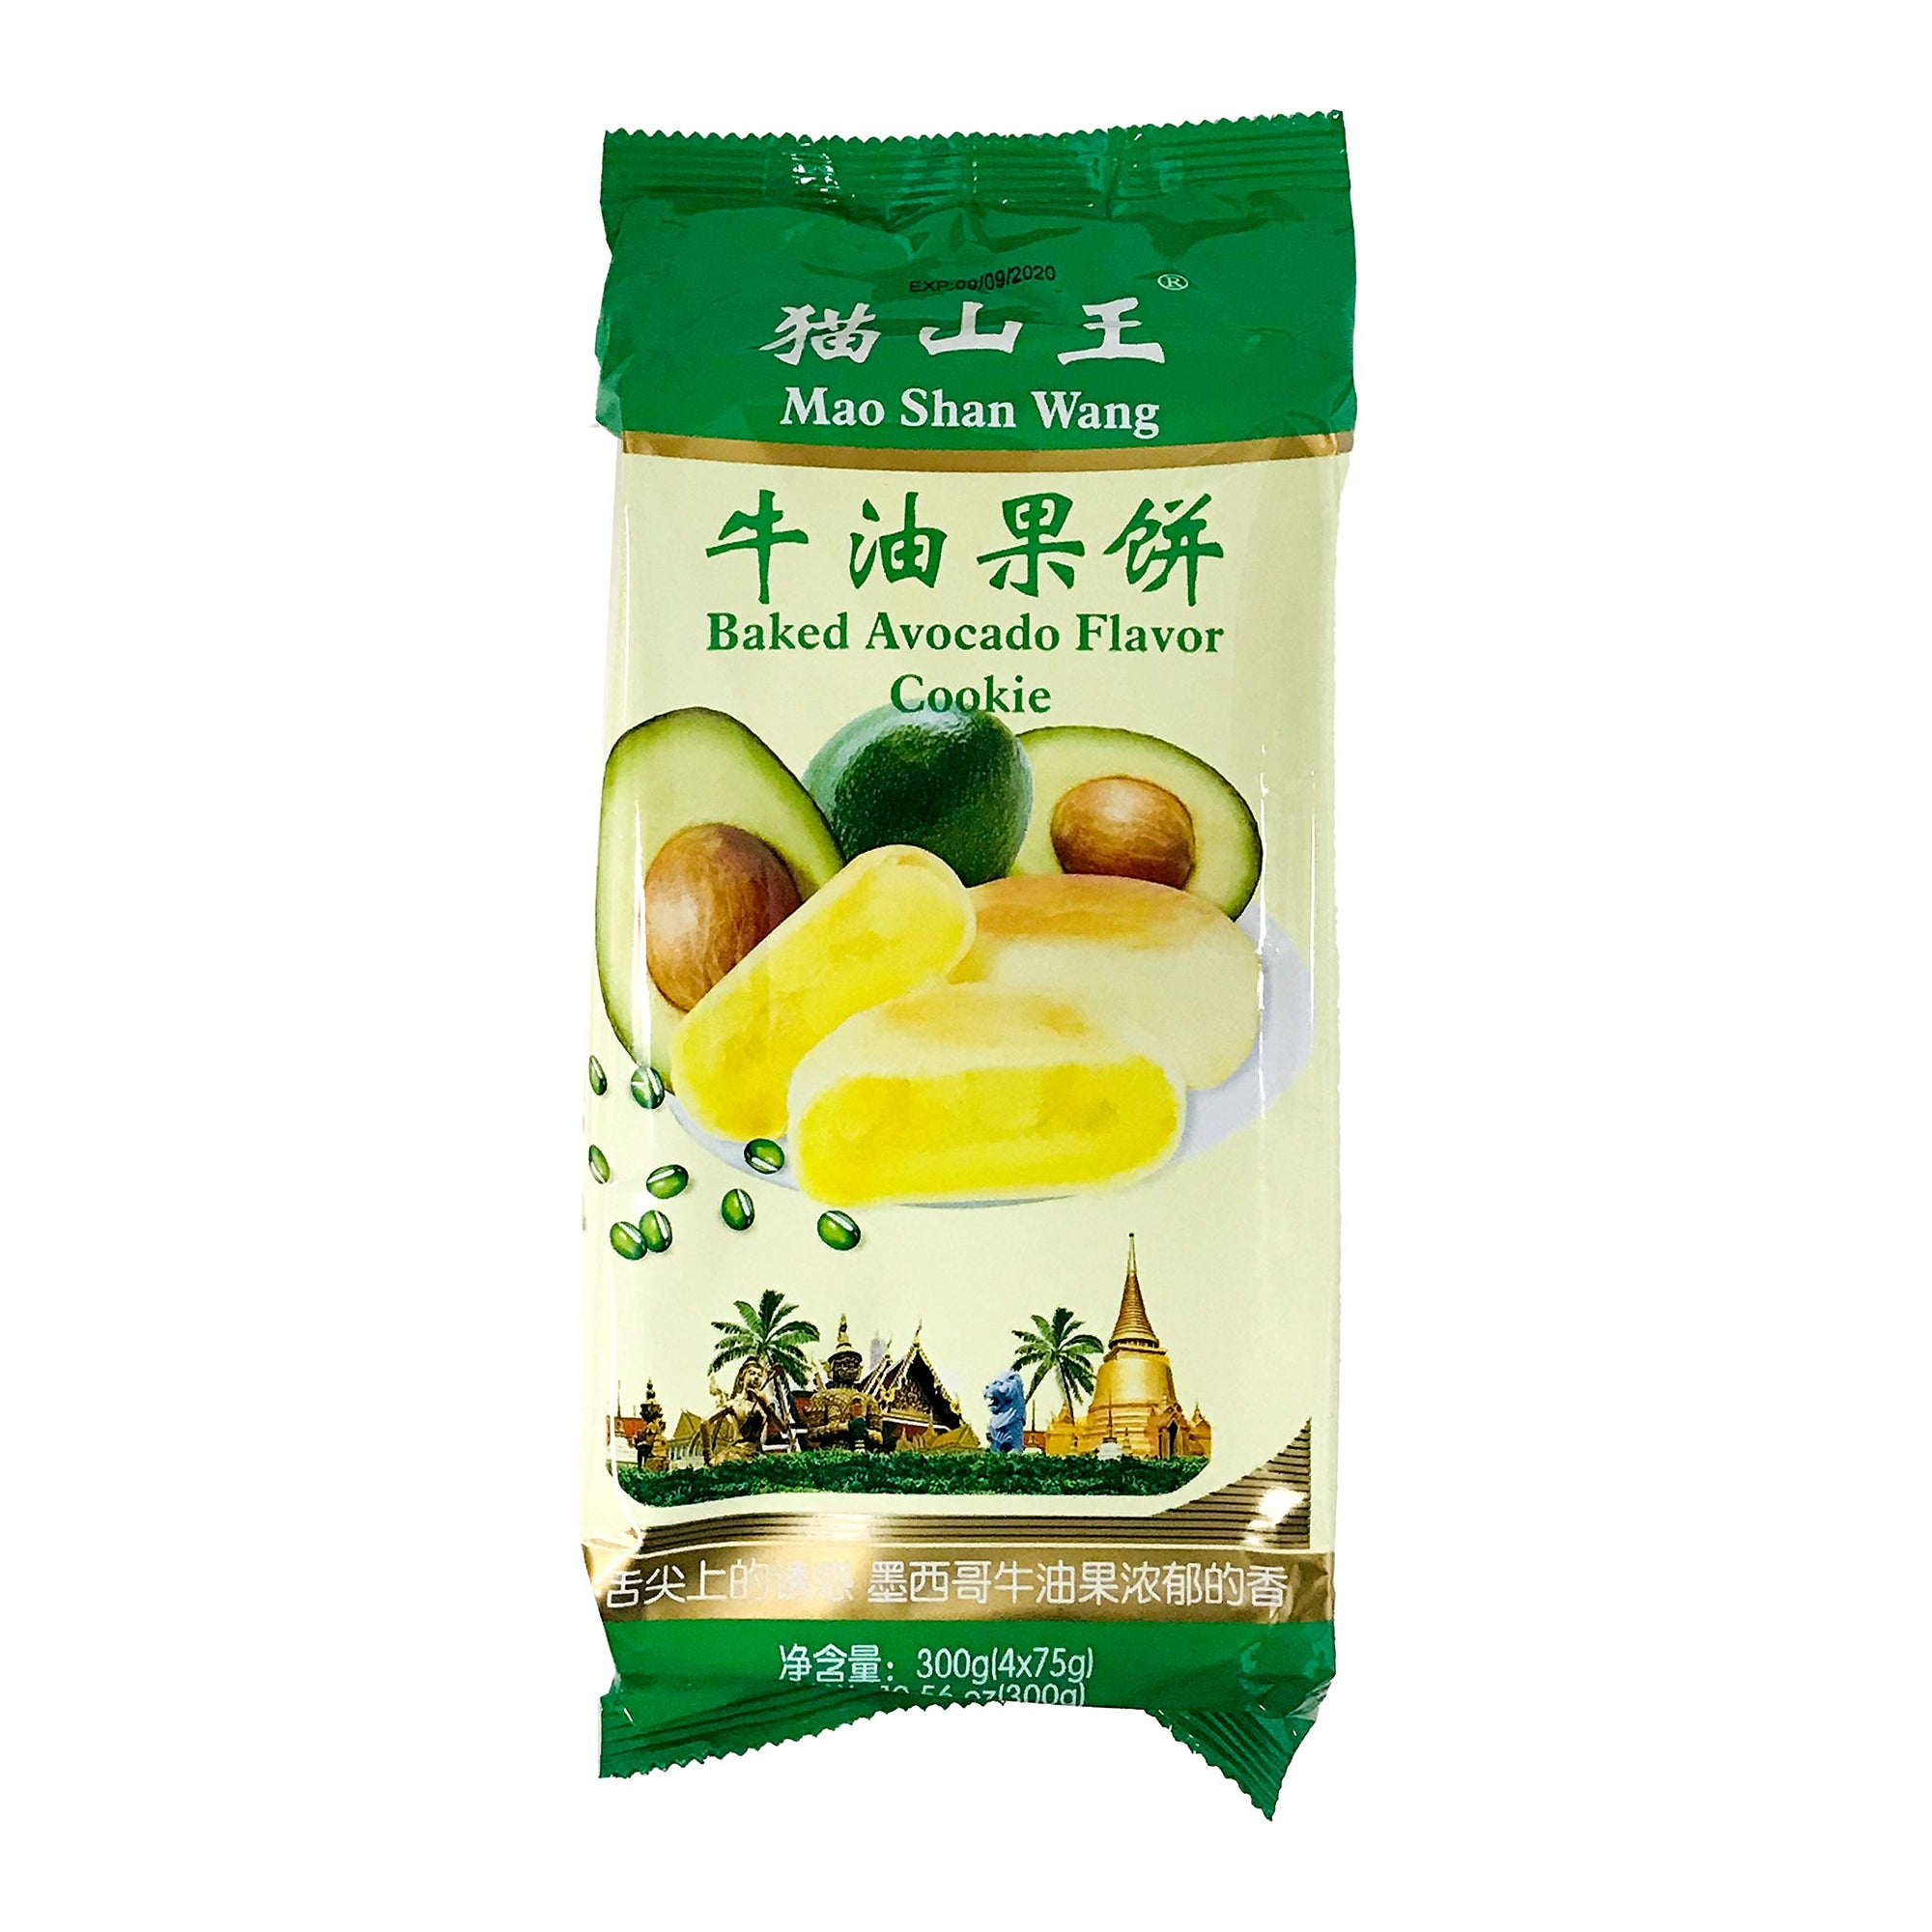 Mao Shan Wang Fruit Flavor Cookie 猫山王果饼 (Baked Avocado Flavor Cookie牛油果饼, pack of 2)